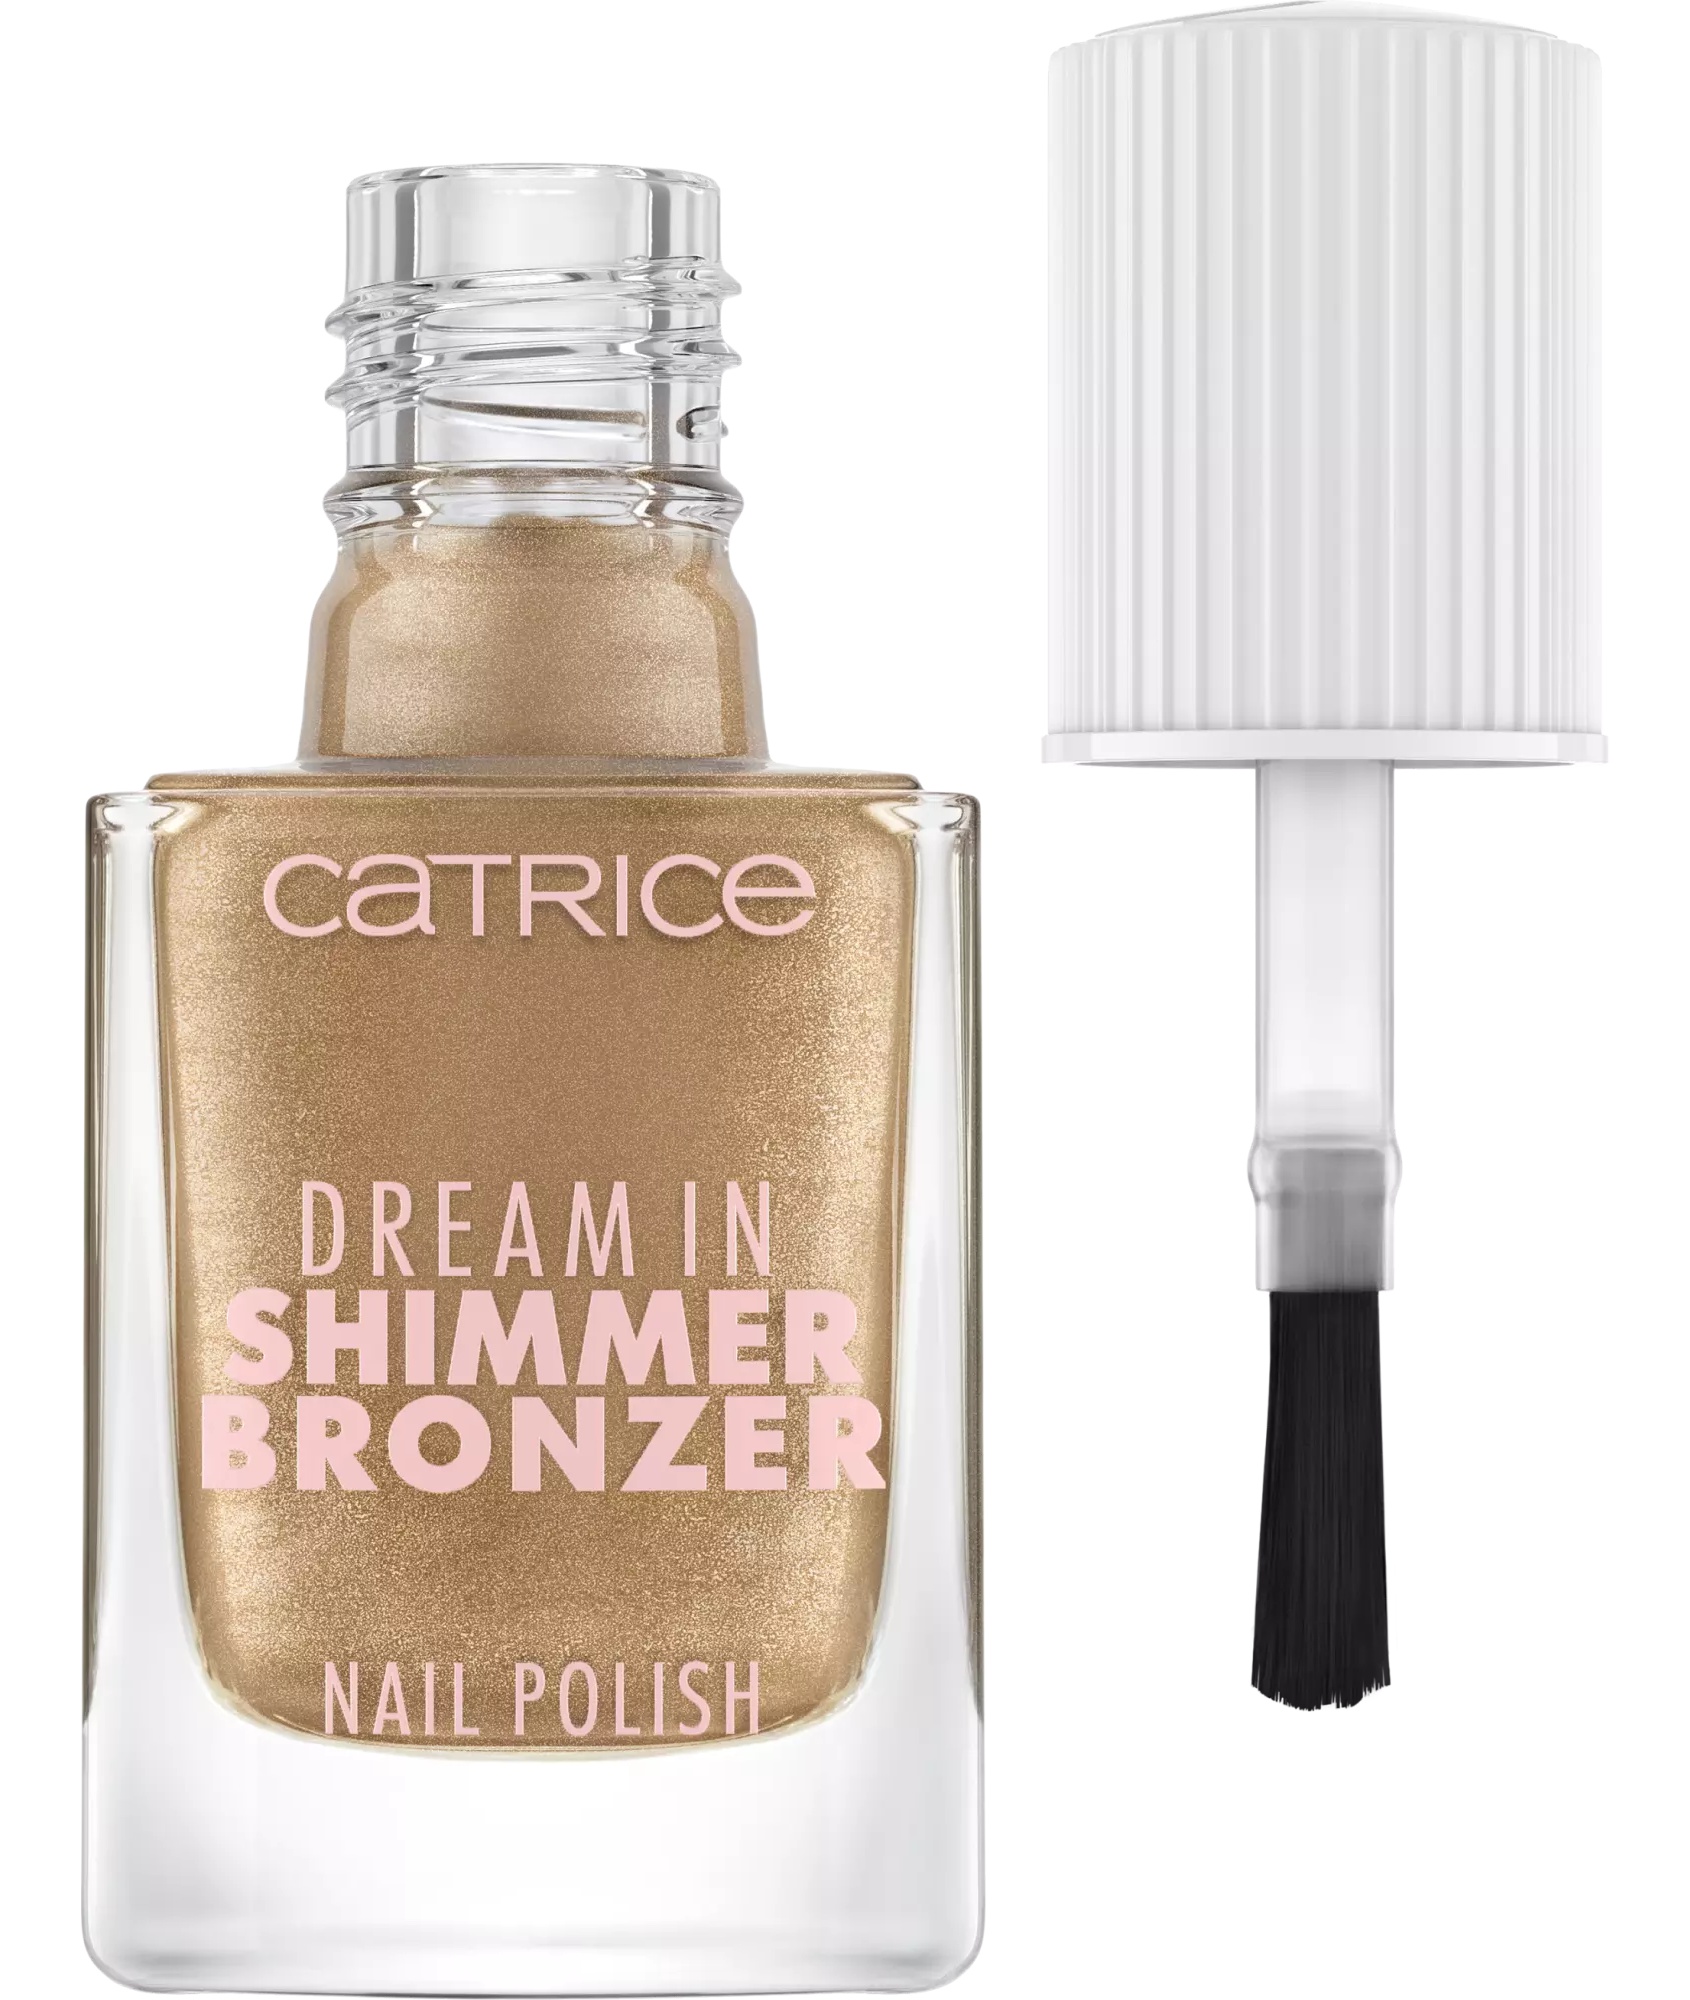 Catrice Dream In Shimmer Bronzer Nail Polish